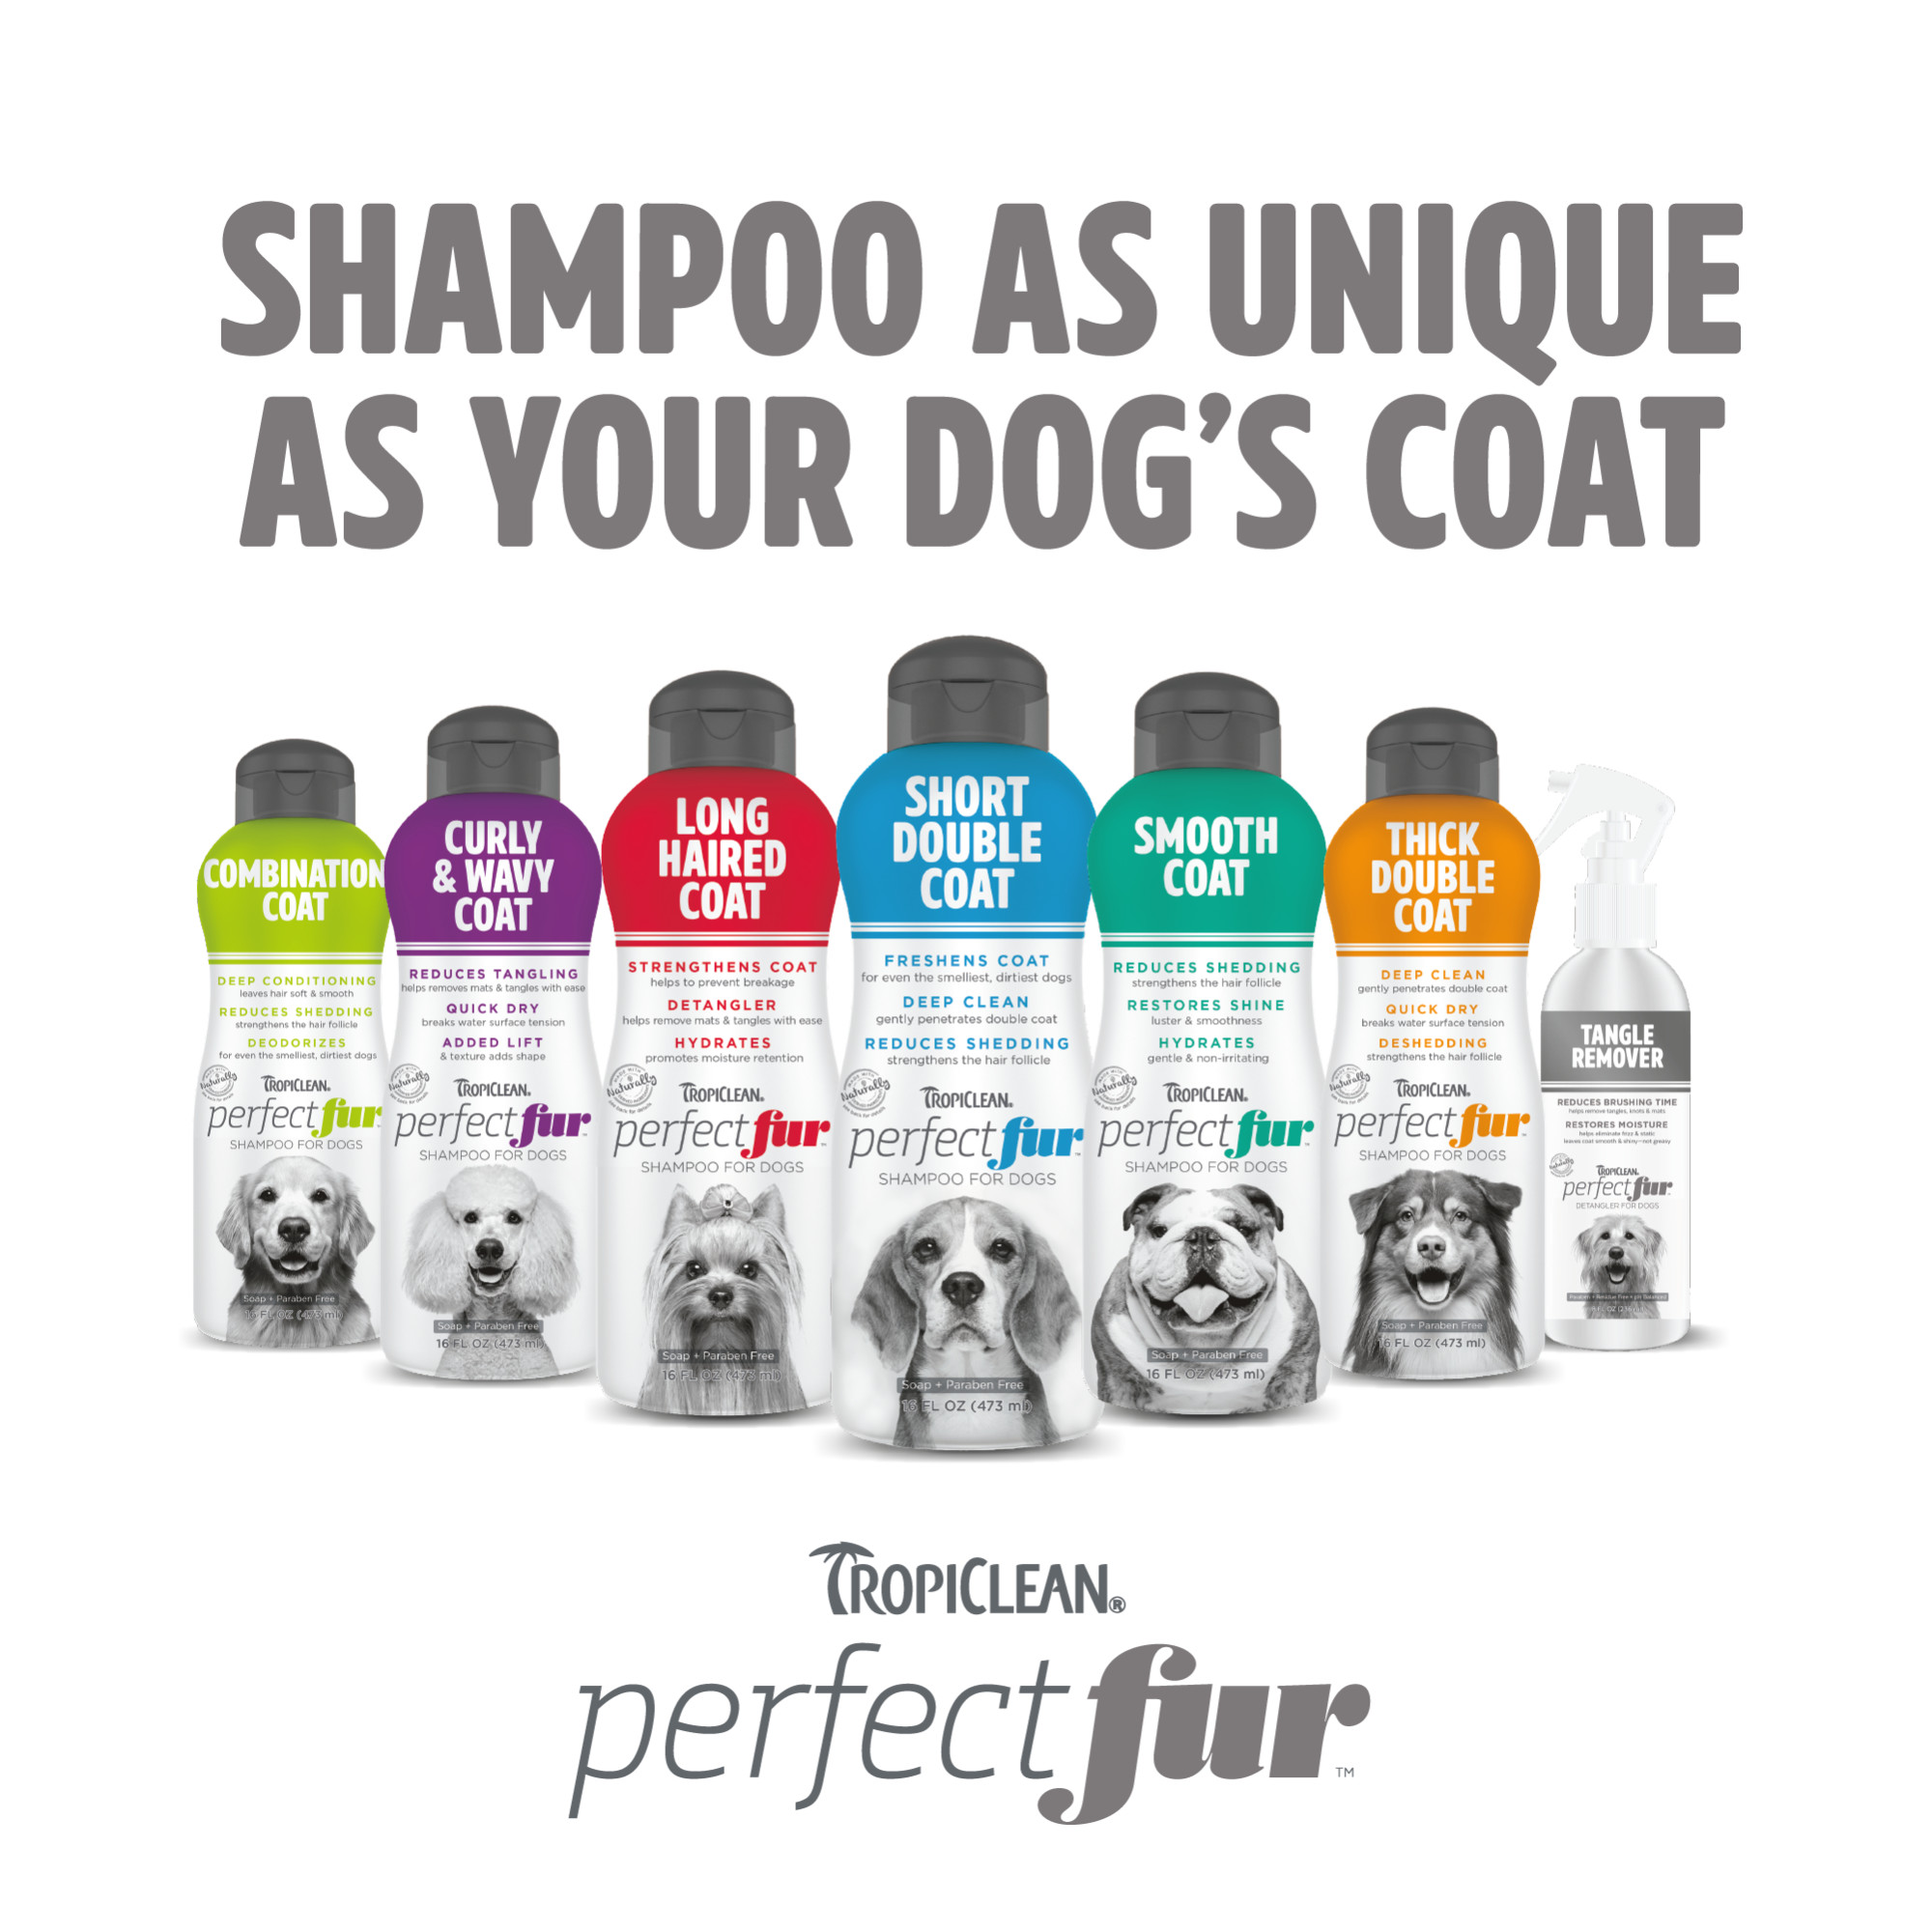 Curly & Wavy Coat Shampoo for Dogs